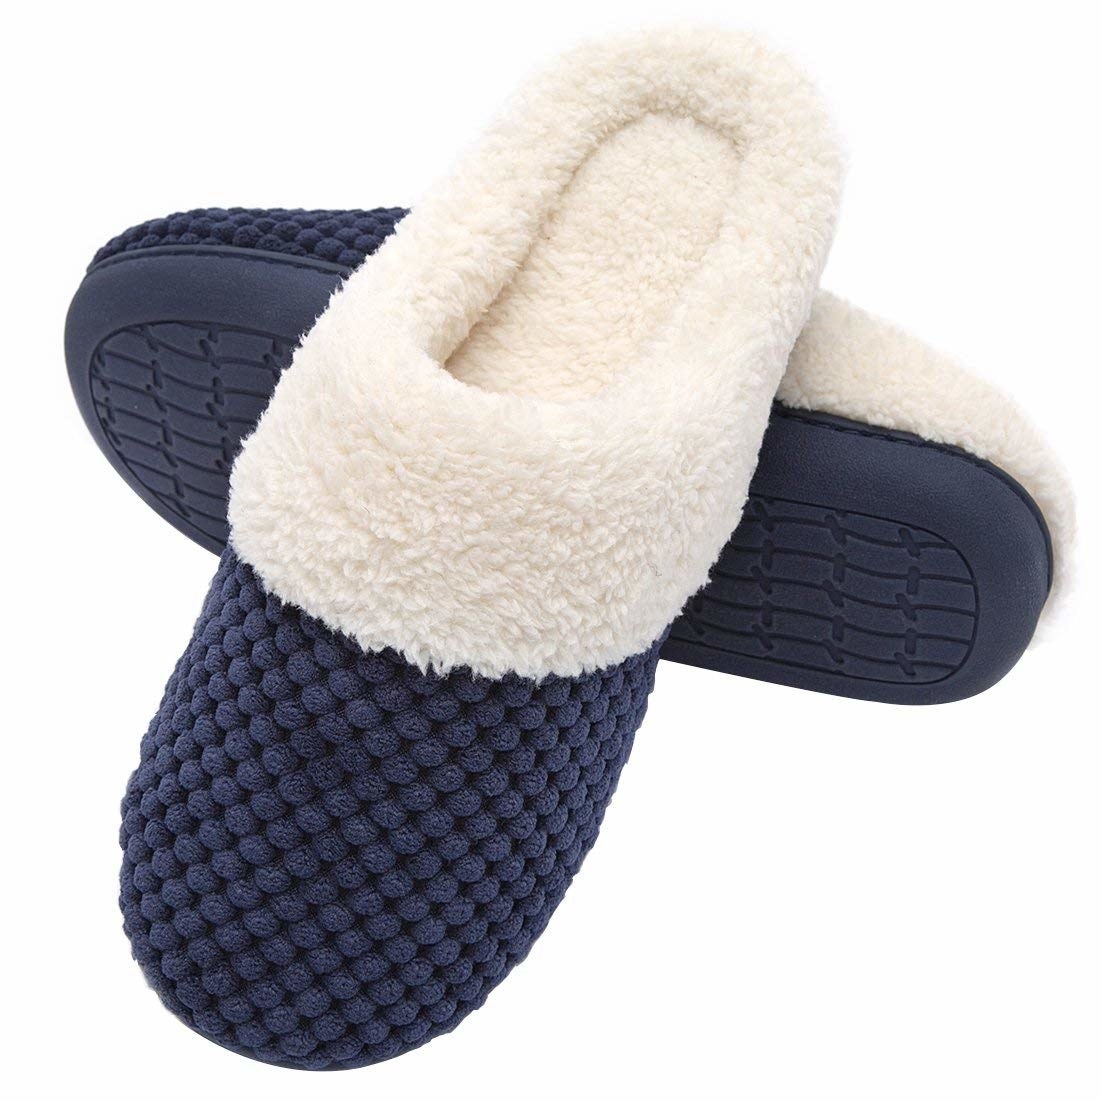 ultraideas slippers canada